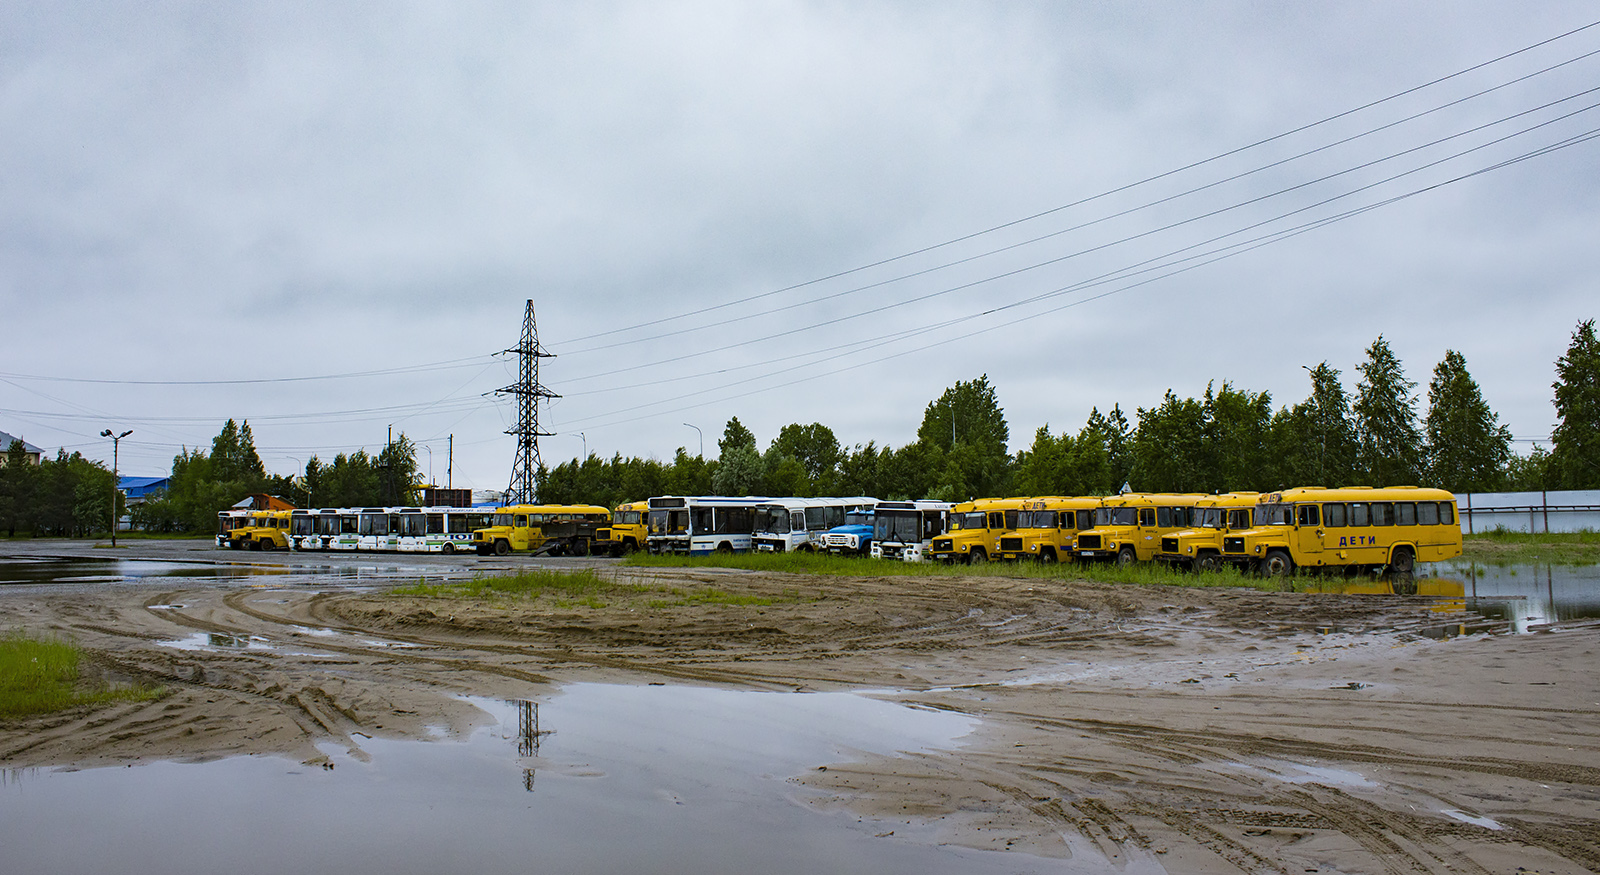 Nizhnevartovsk — Buses without numbers